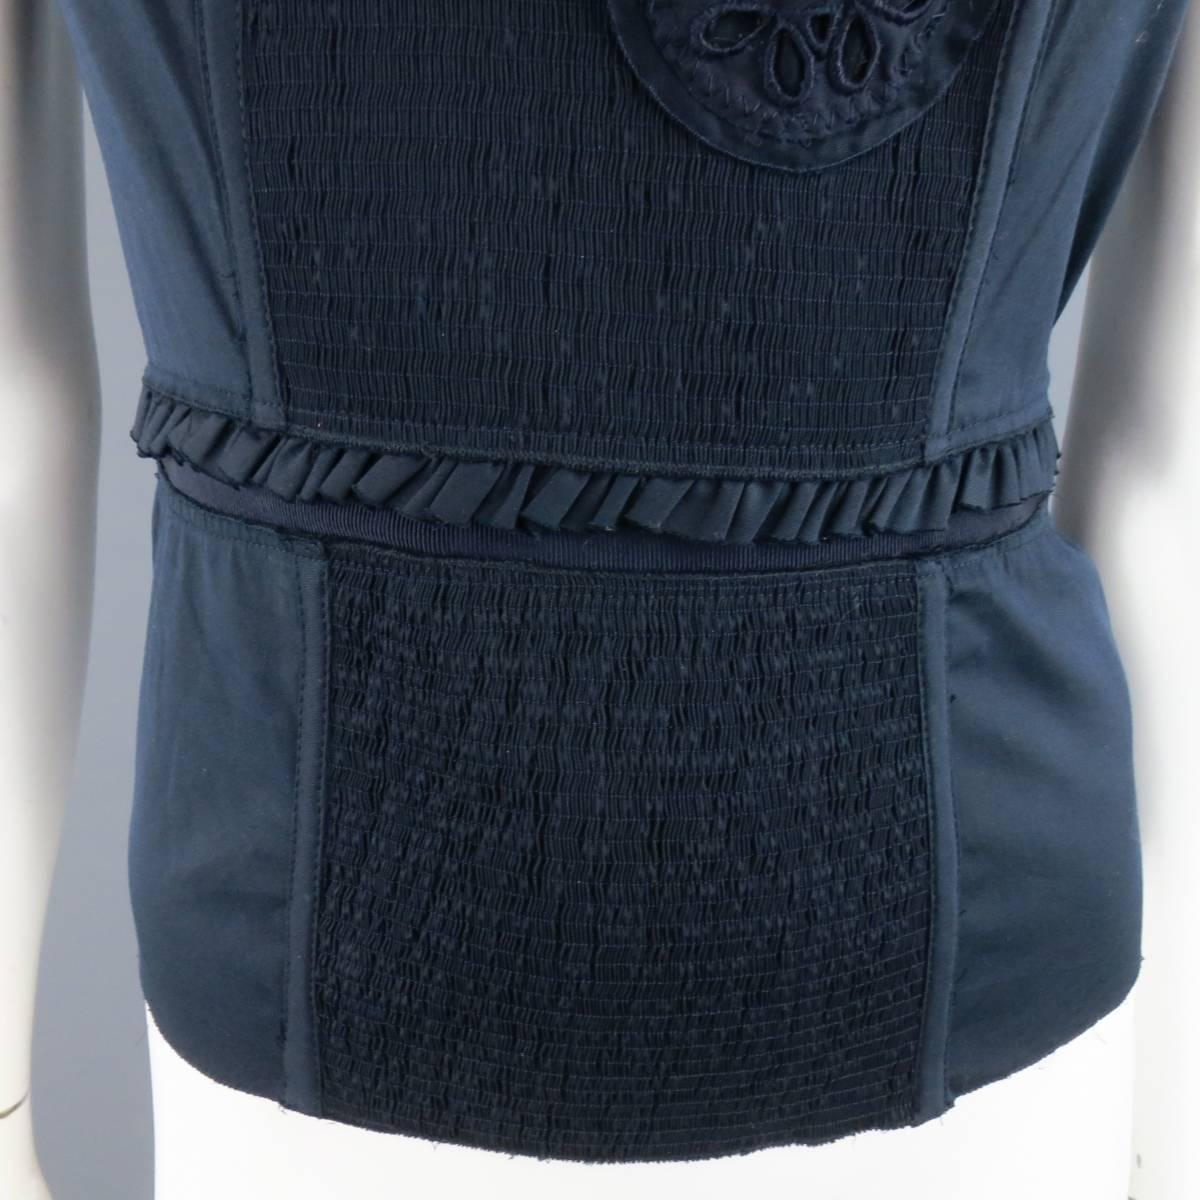 Black PRADA Size 4 Navy Stretch Cotton Sleeveless Applique Top